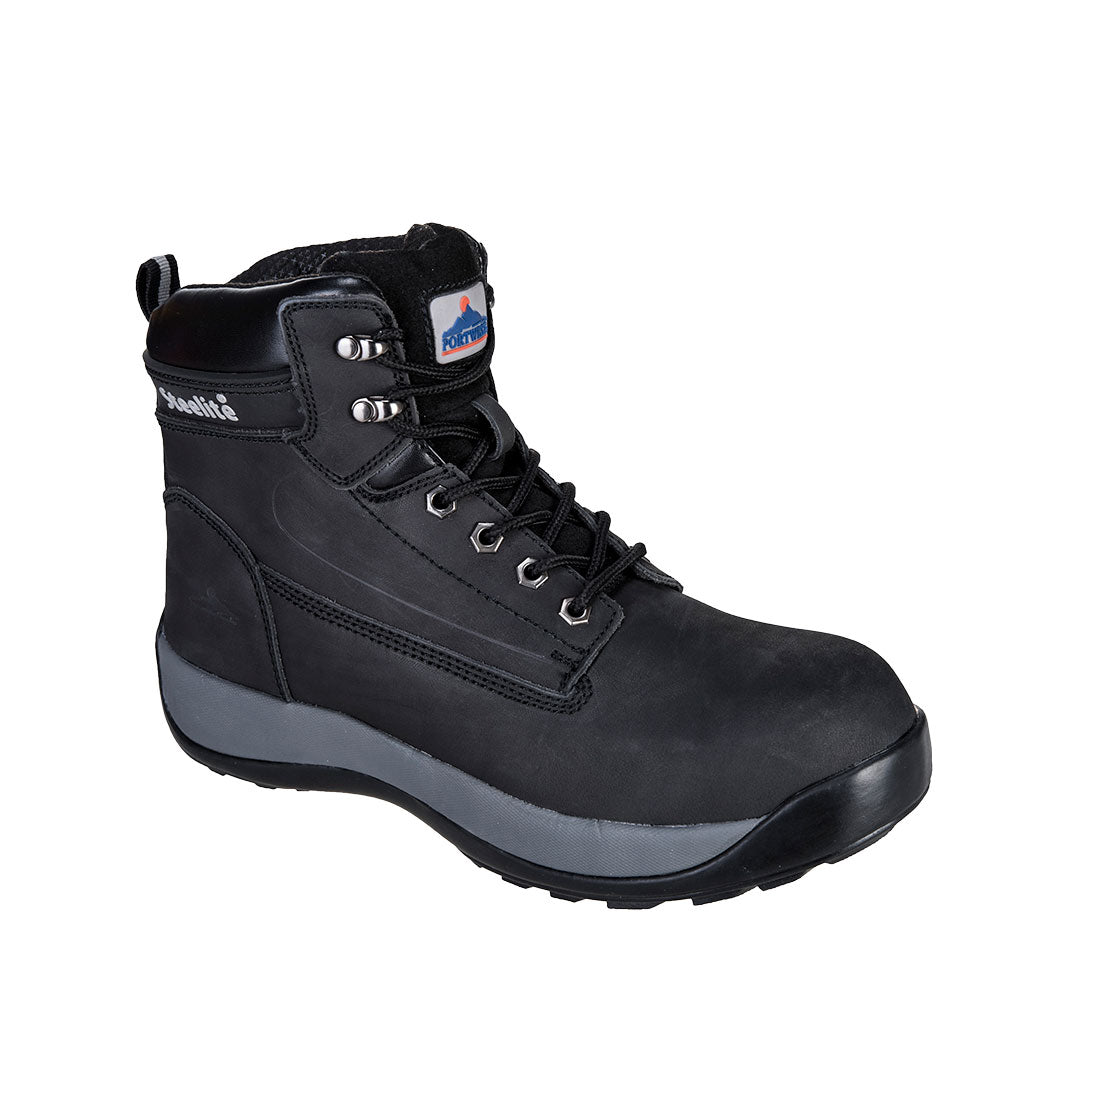 Portwest Workwear FW32 - Steelite Construction Nubuck Boot S3 HRO Black size 10.5